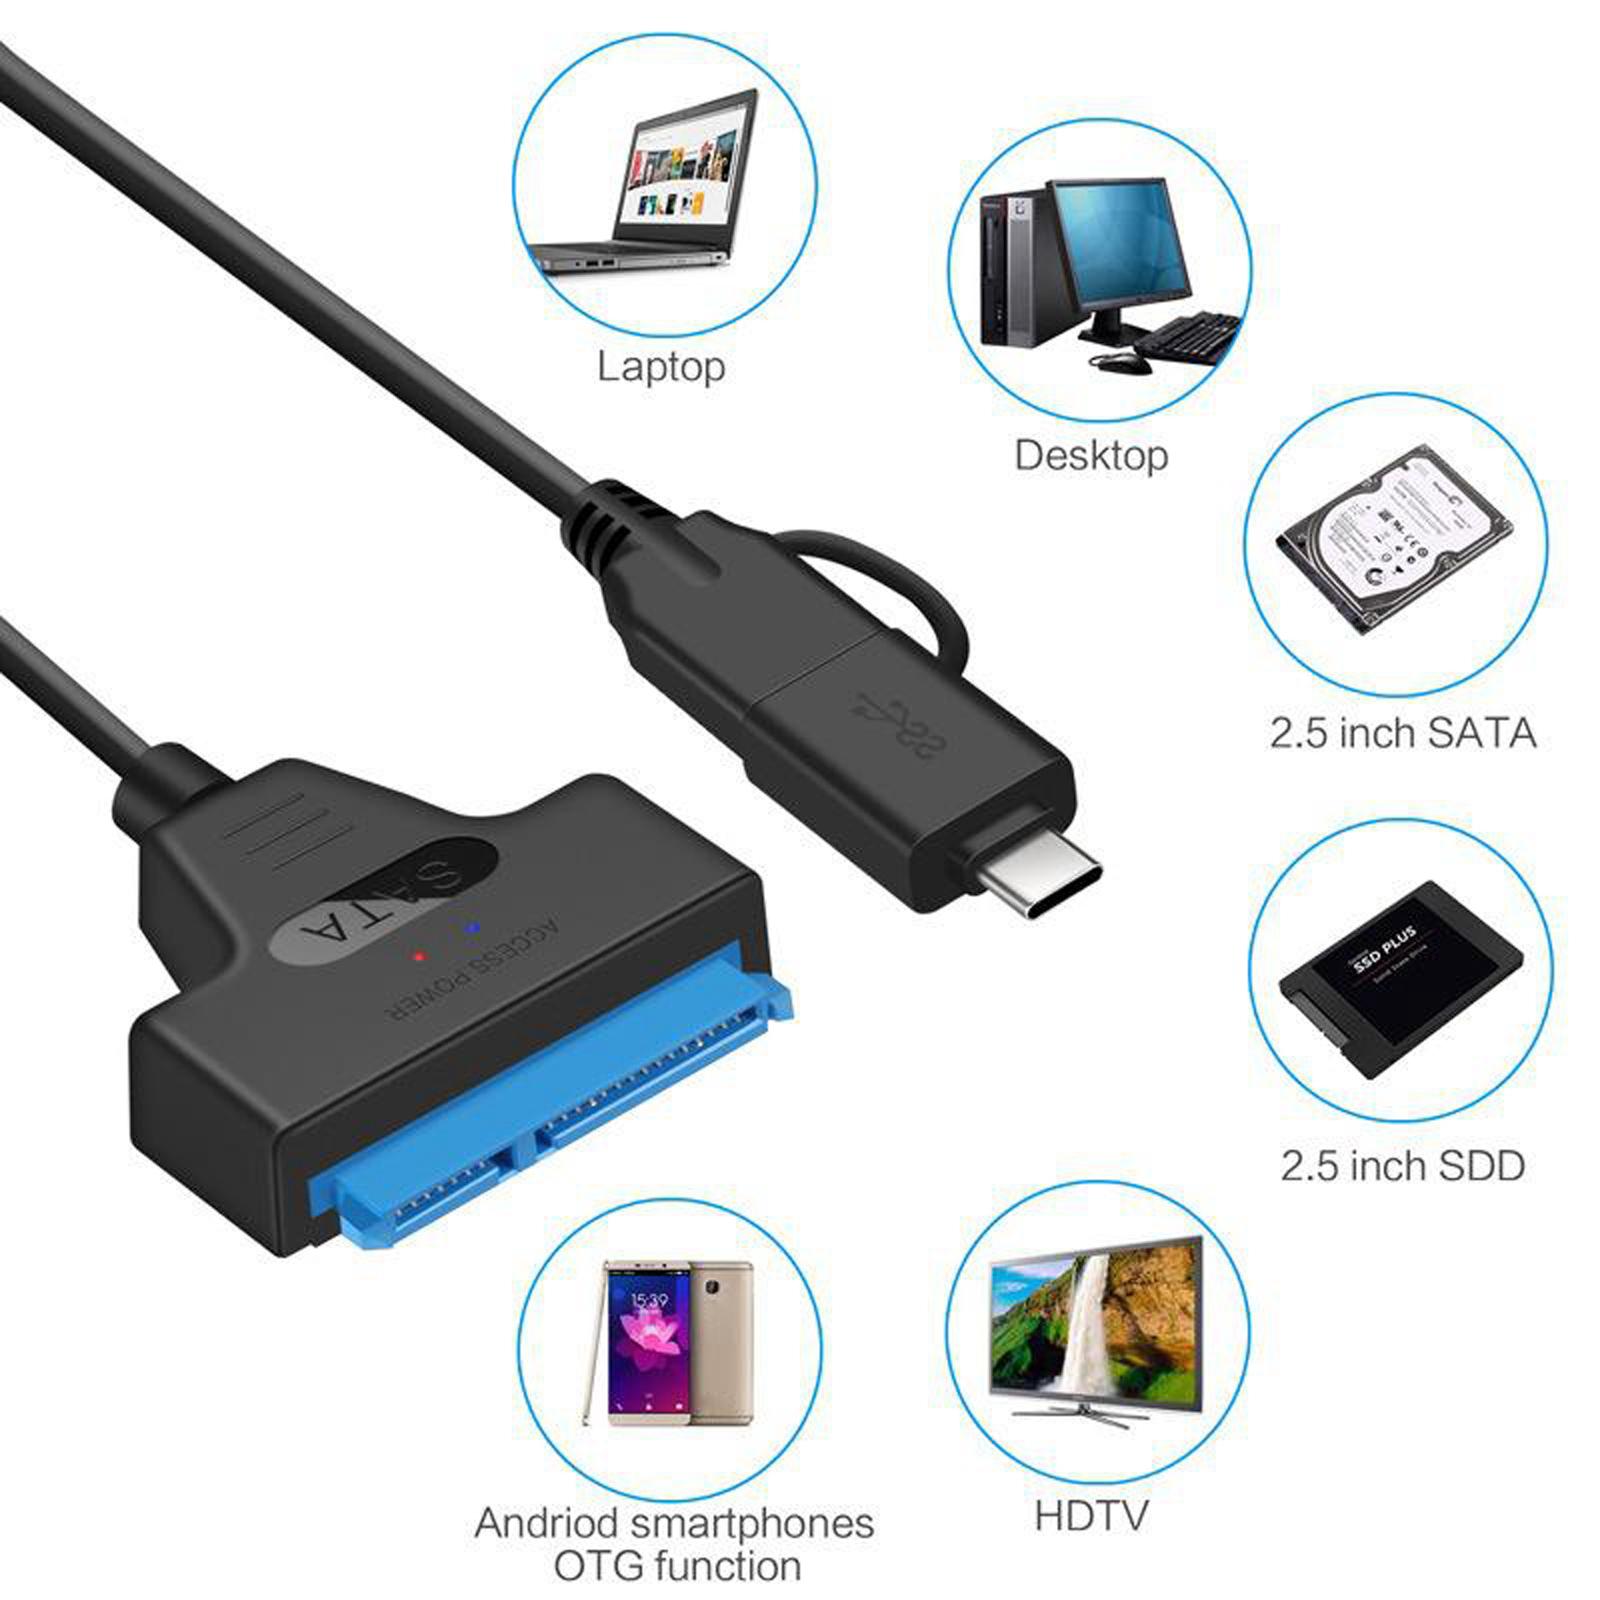 SATA to USB Adapter, USB 3.0 SATA III Hard Drive Adapter Cable, SATA to USB 3.0 Adapter Cable, for 2.5 inch SSD & HDD High Quality